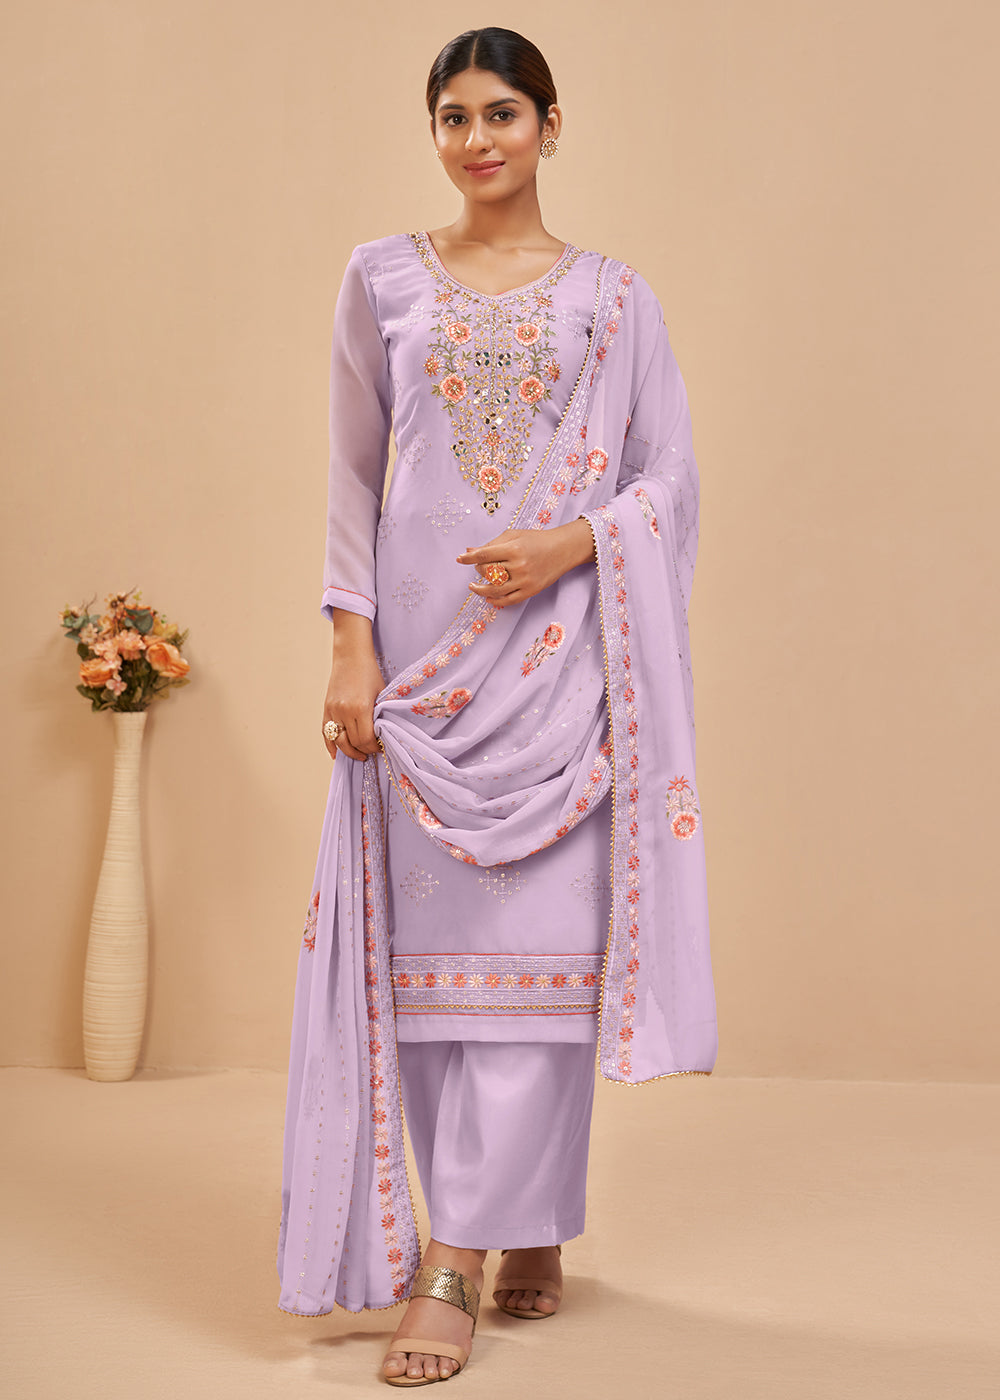 Buy Lavender Beautifully Embroidered Suit - Elegant Salwar Kameez